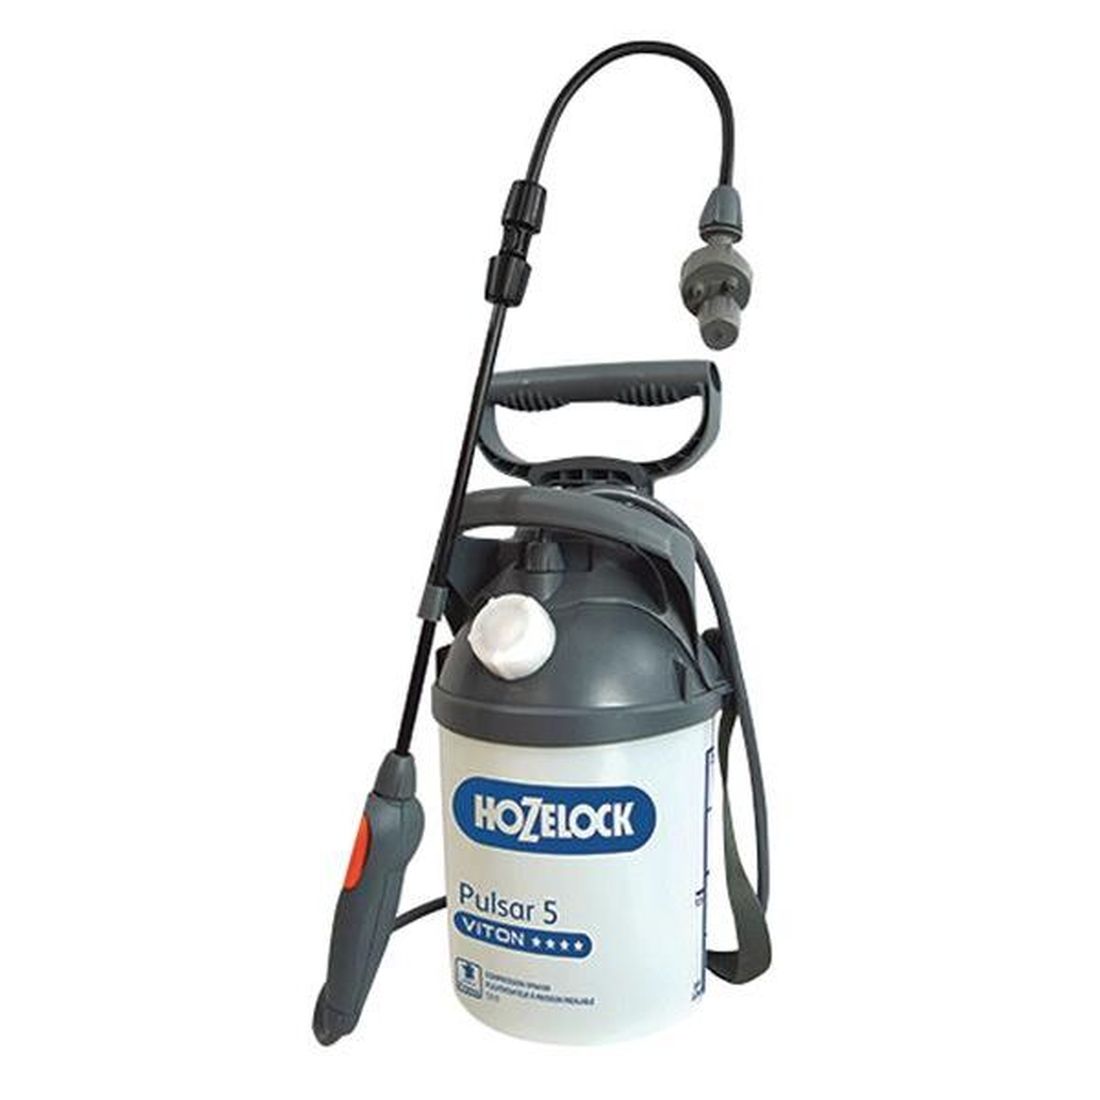 Hozelock 5310 Pulsar Viton Pressure Sprayer 5 litre                                     